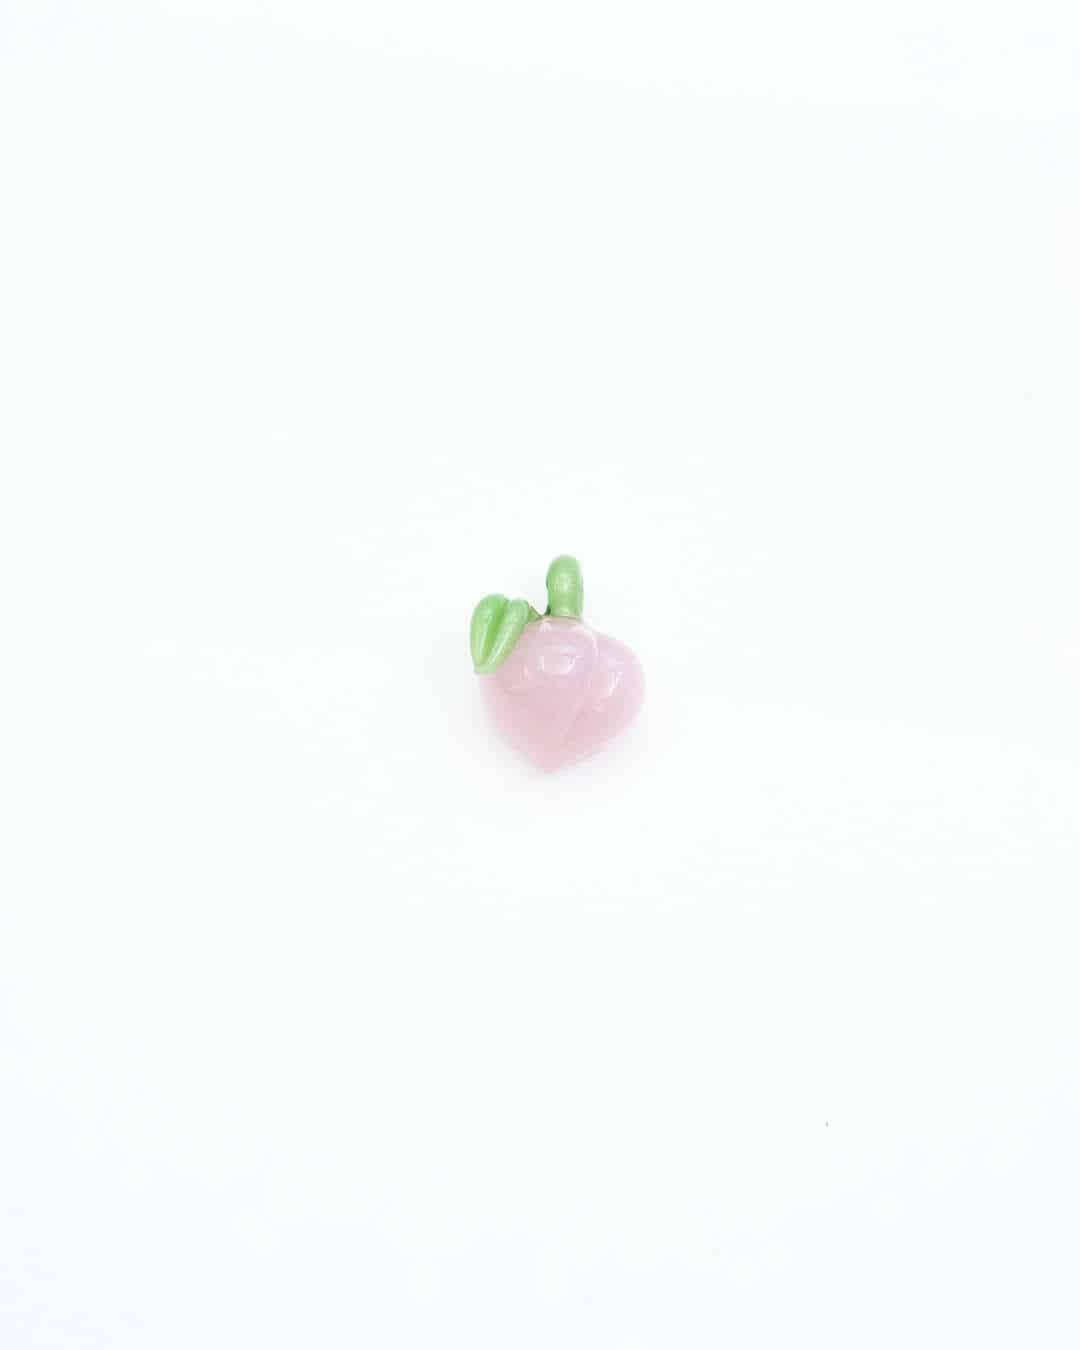 luxurious glass pendant - (9C) Pink Peach w/ Green Stem Pendant by Gnarla Carla